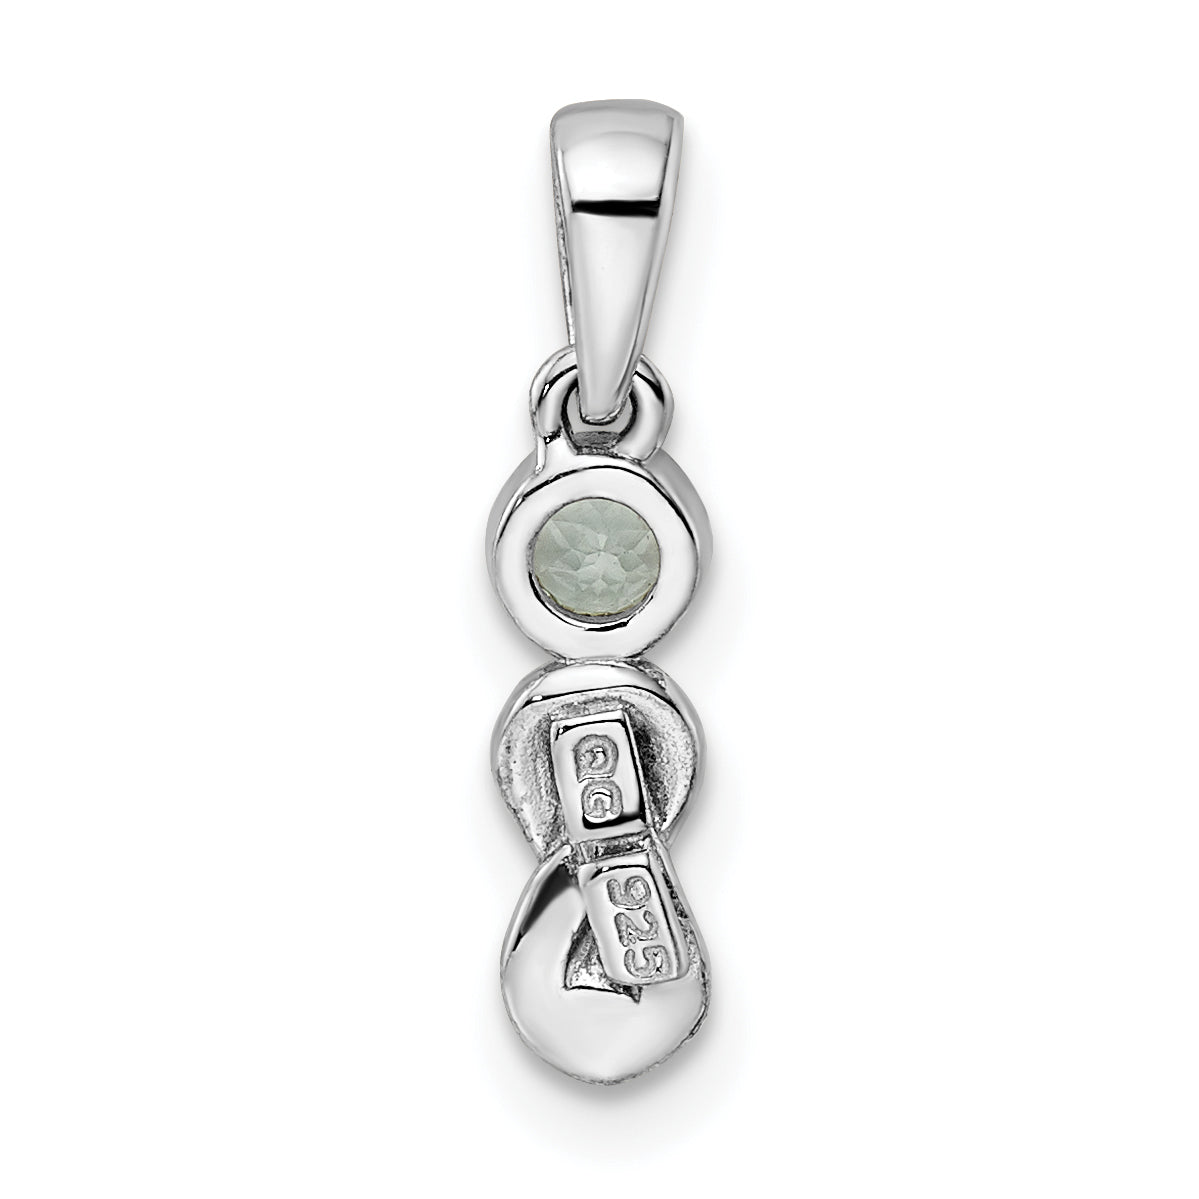 Sterling Silver Rhodium-plated Aquamarine Infinity Birthstone Pendant